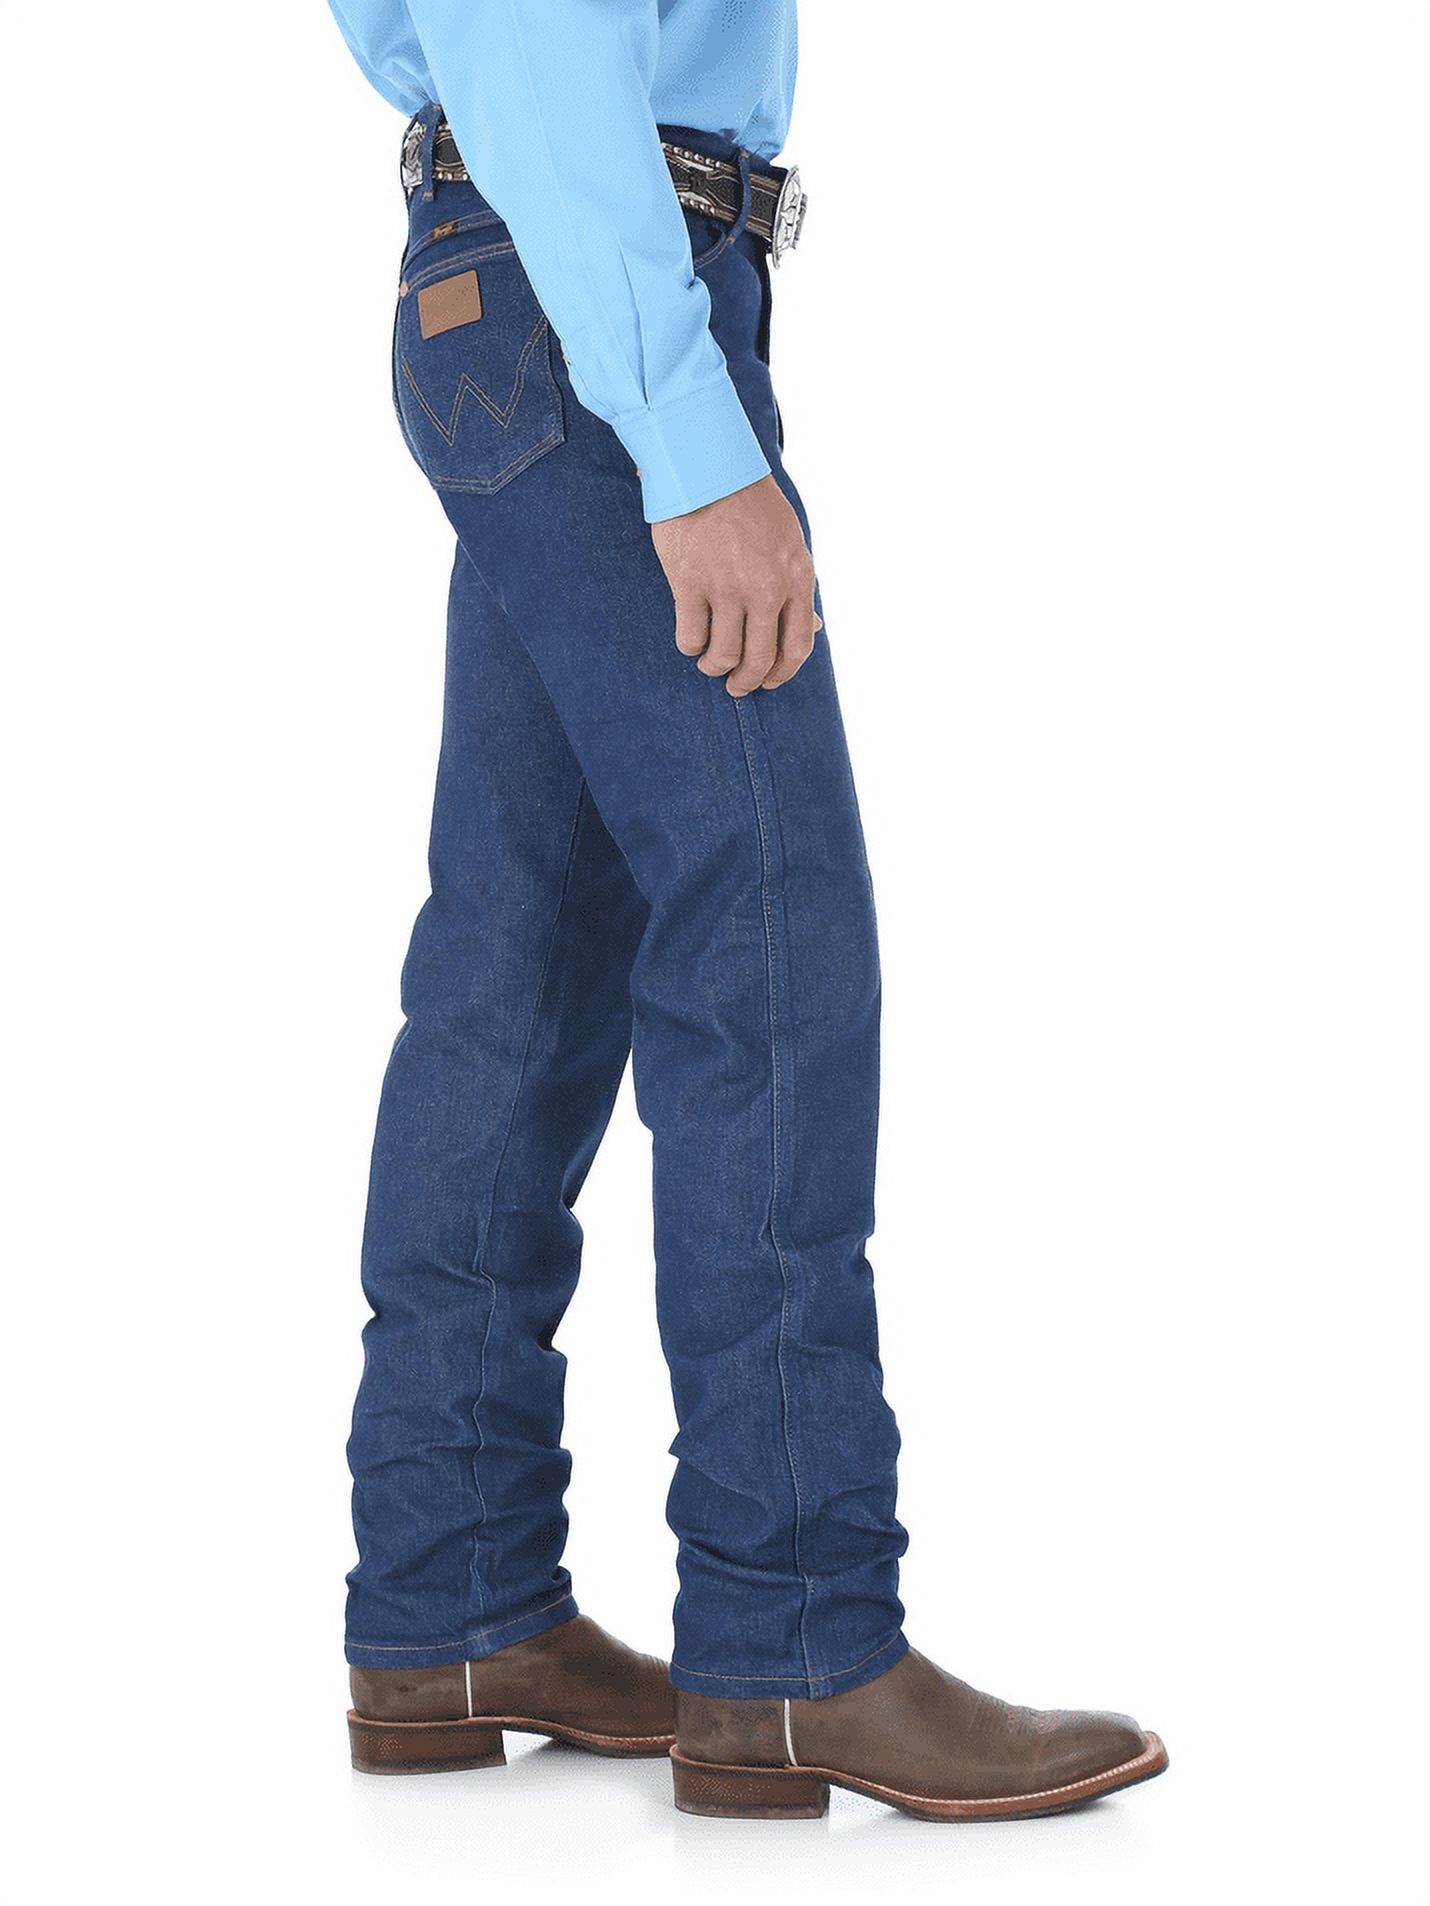 Wrangler Men's Cowboy Cut Original Straight Fit Jean - image 3 of 4